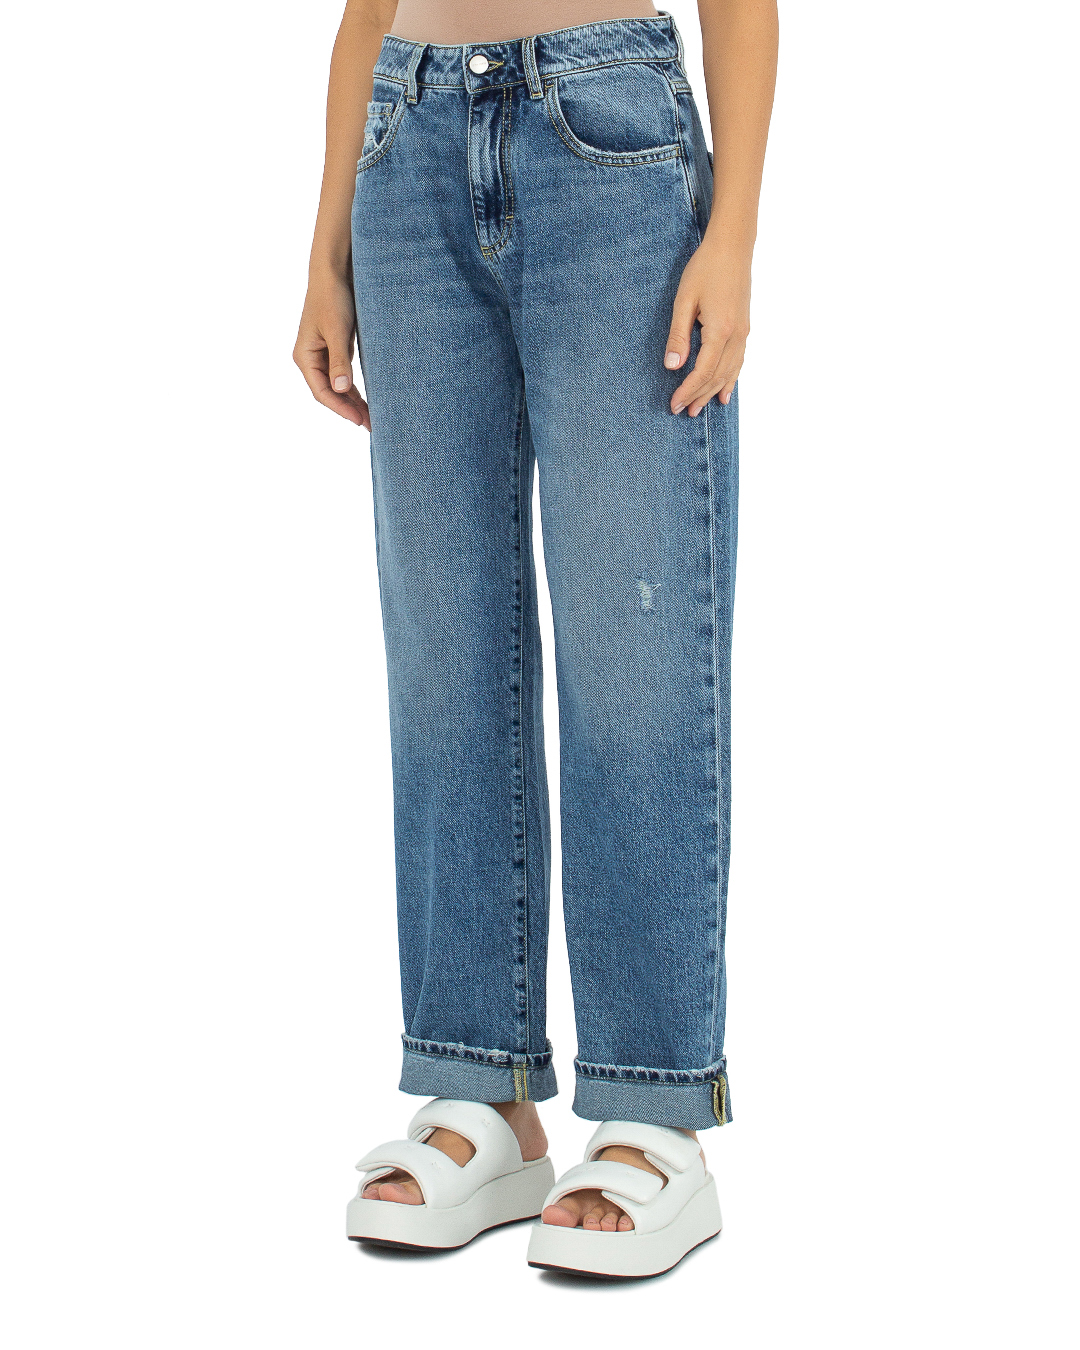 джинсы ICON DENIM BELLAID709 синий 26, размер 26 - фото 3